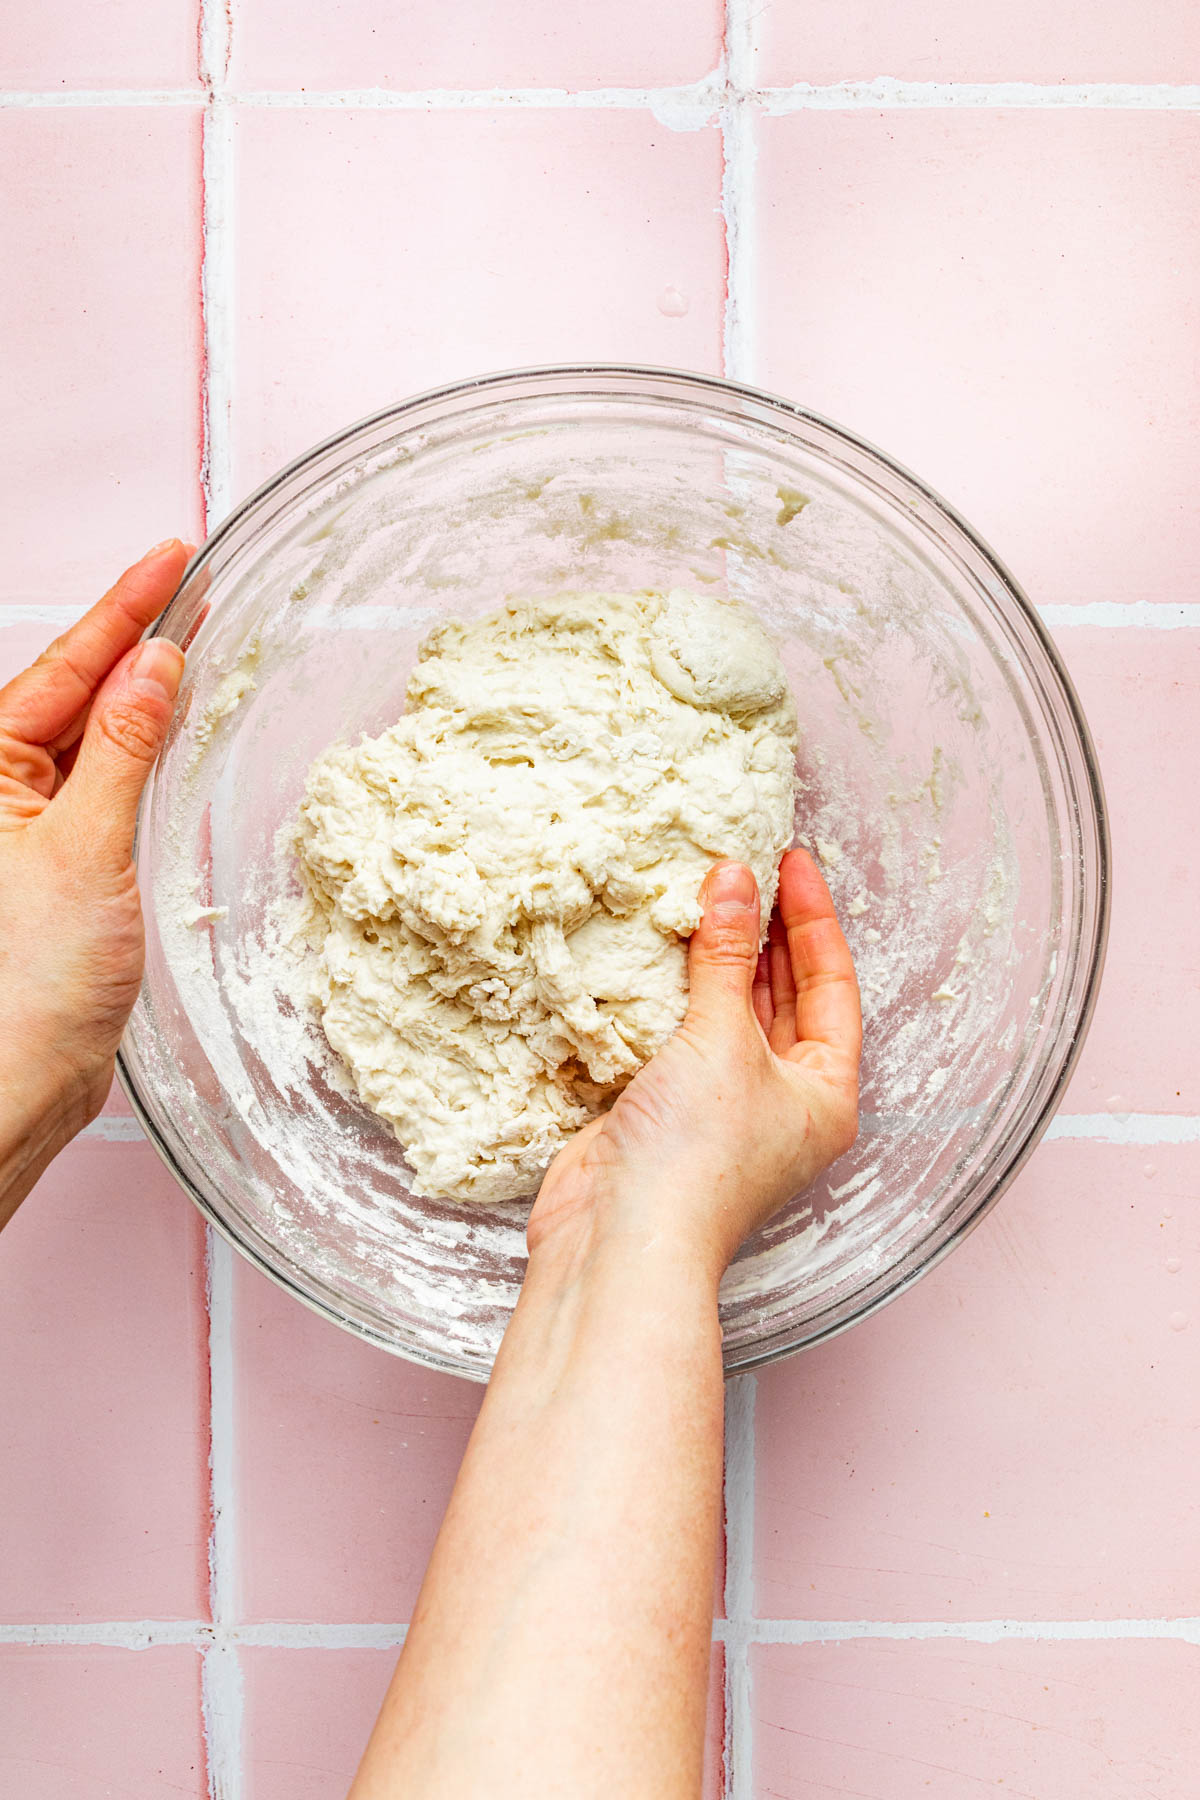 A hand reaching into a glass mixing bowl to mix shaggy dough.